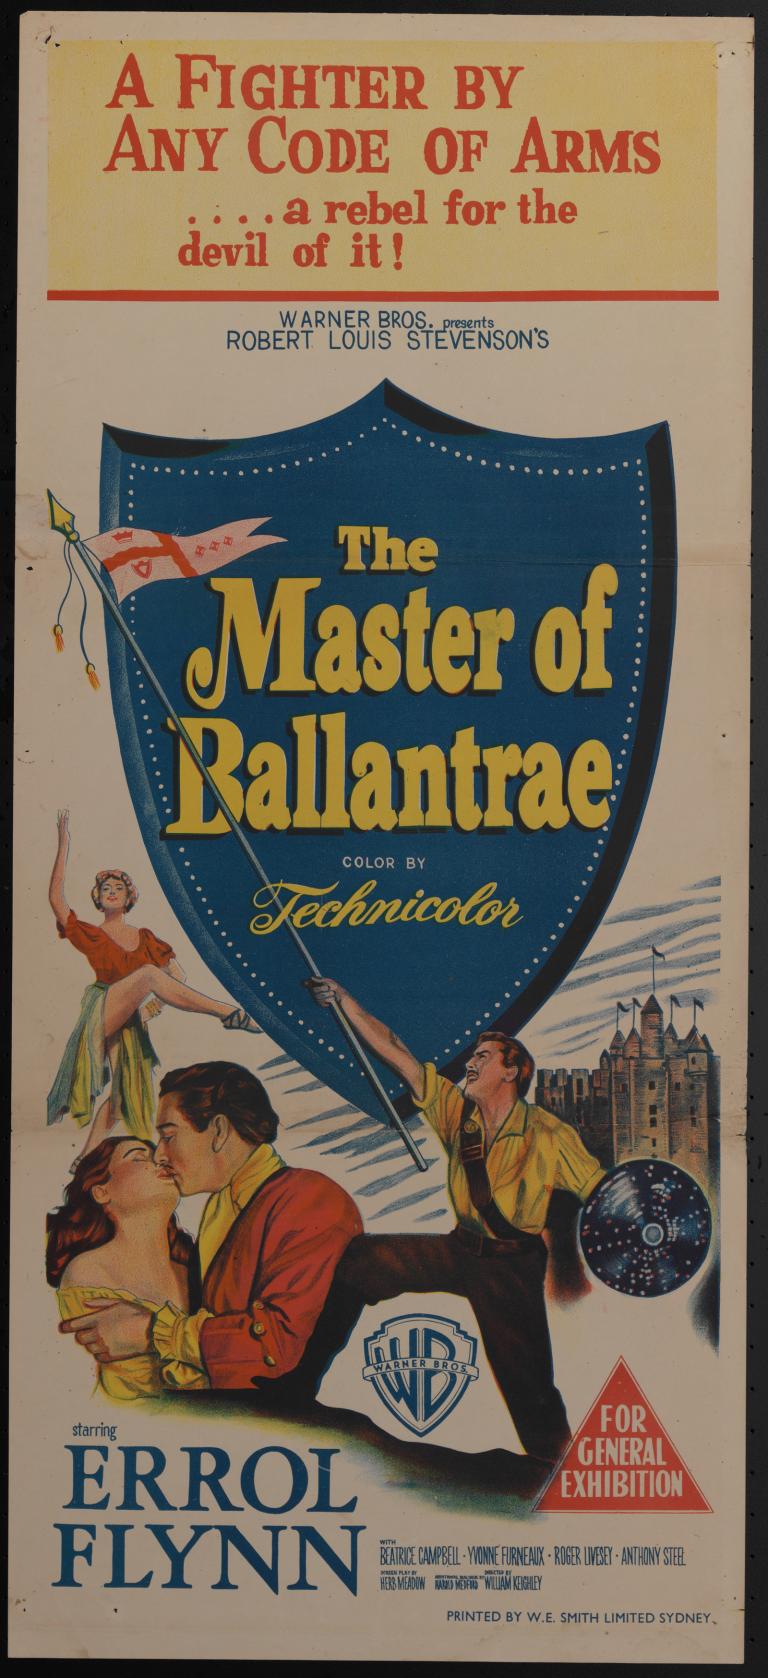 Poster for a film starring Errol Flynn titled The Master of Ballantrae